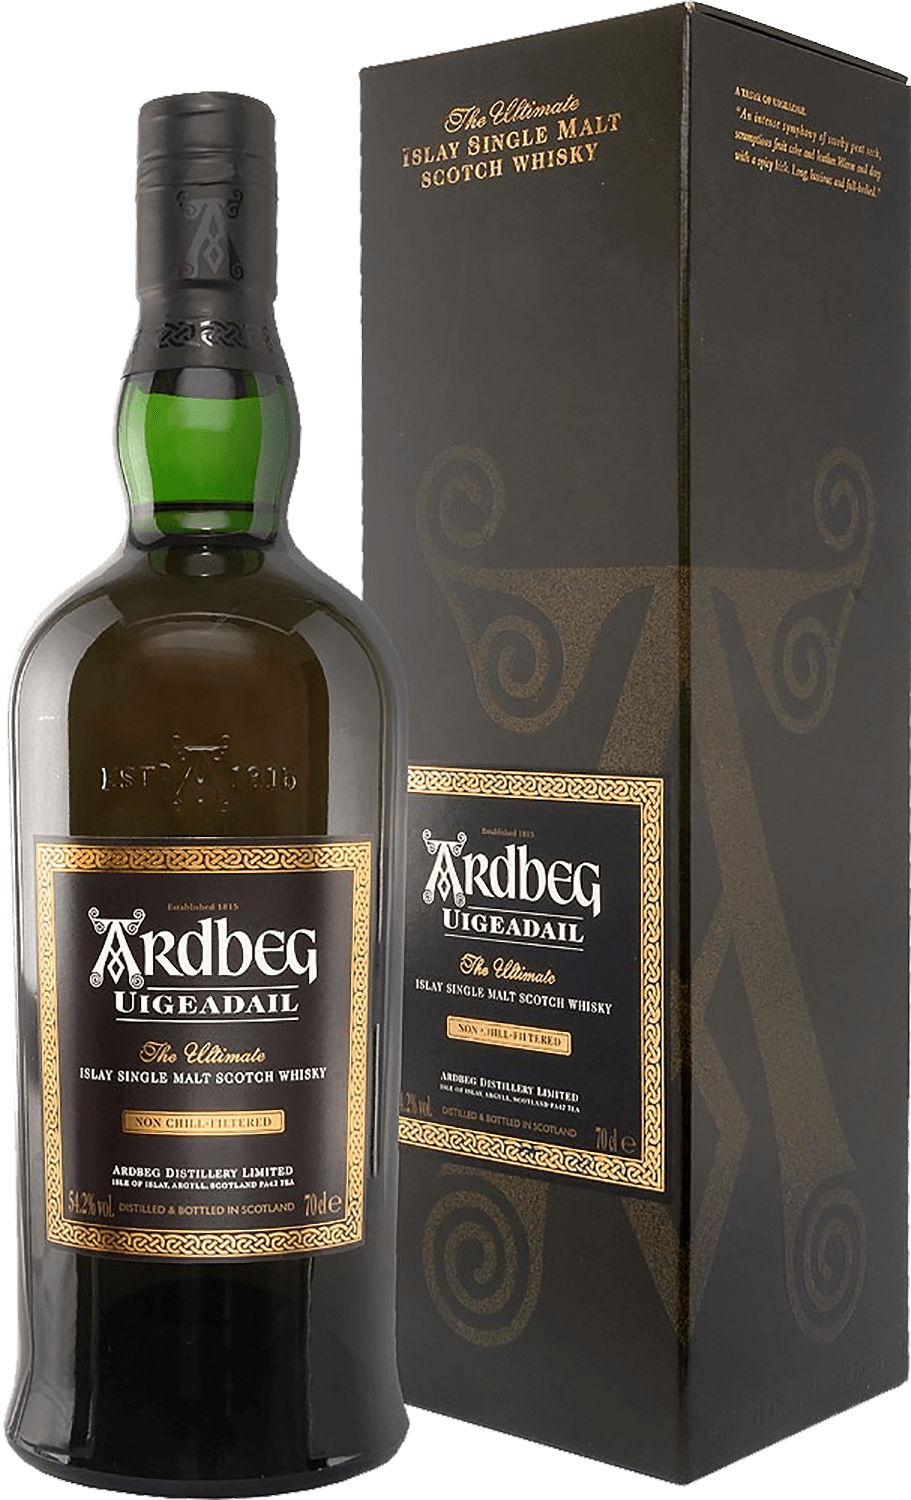 Ardbeg Uigeadail Single Malt Scotch Whisky glenfarclas single malt scotch whisky 10 y o